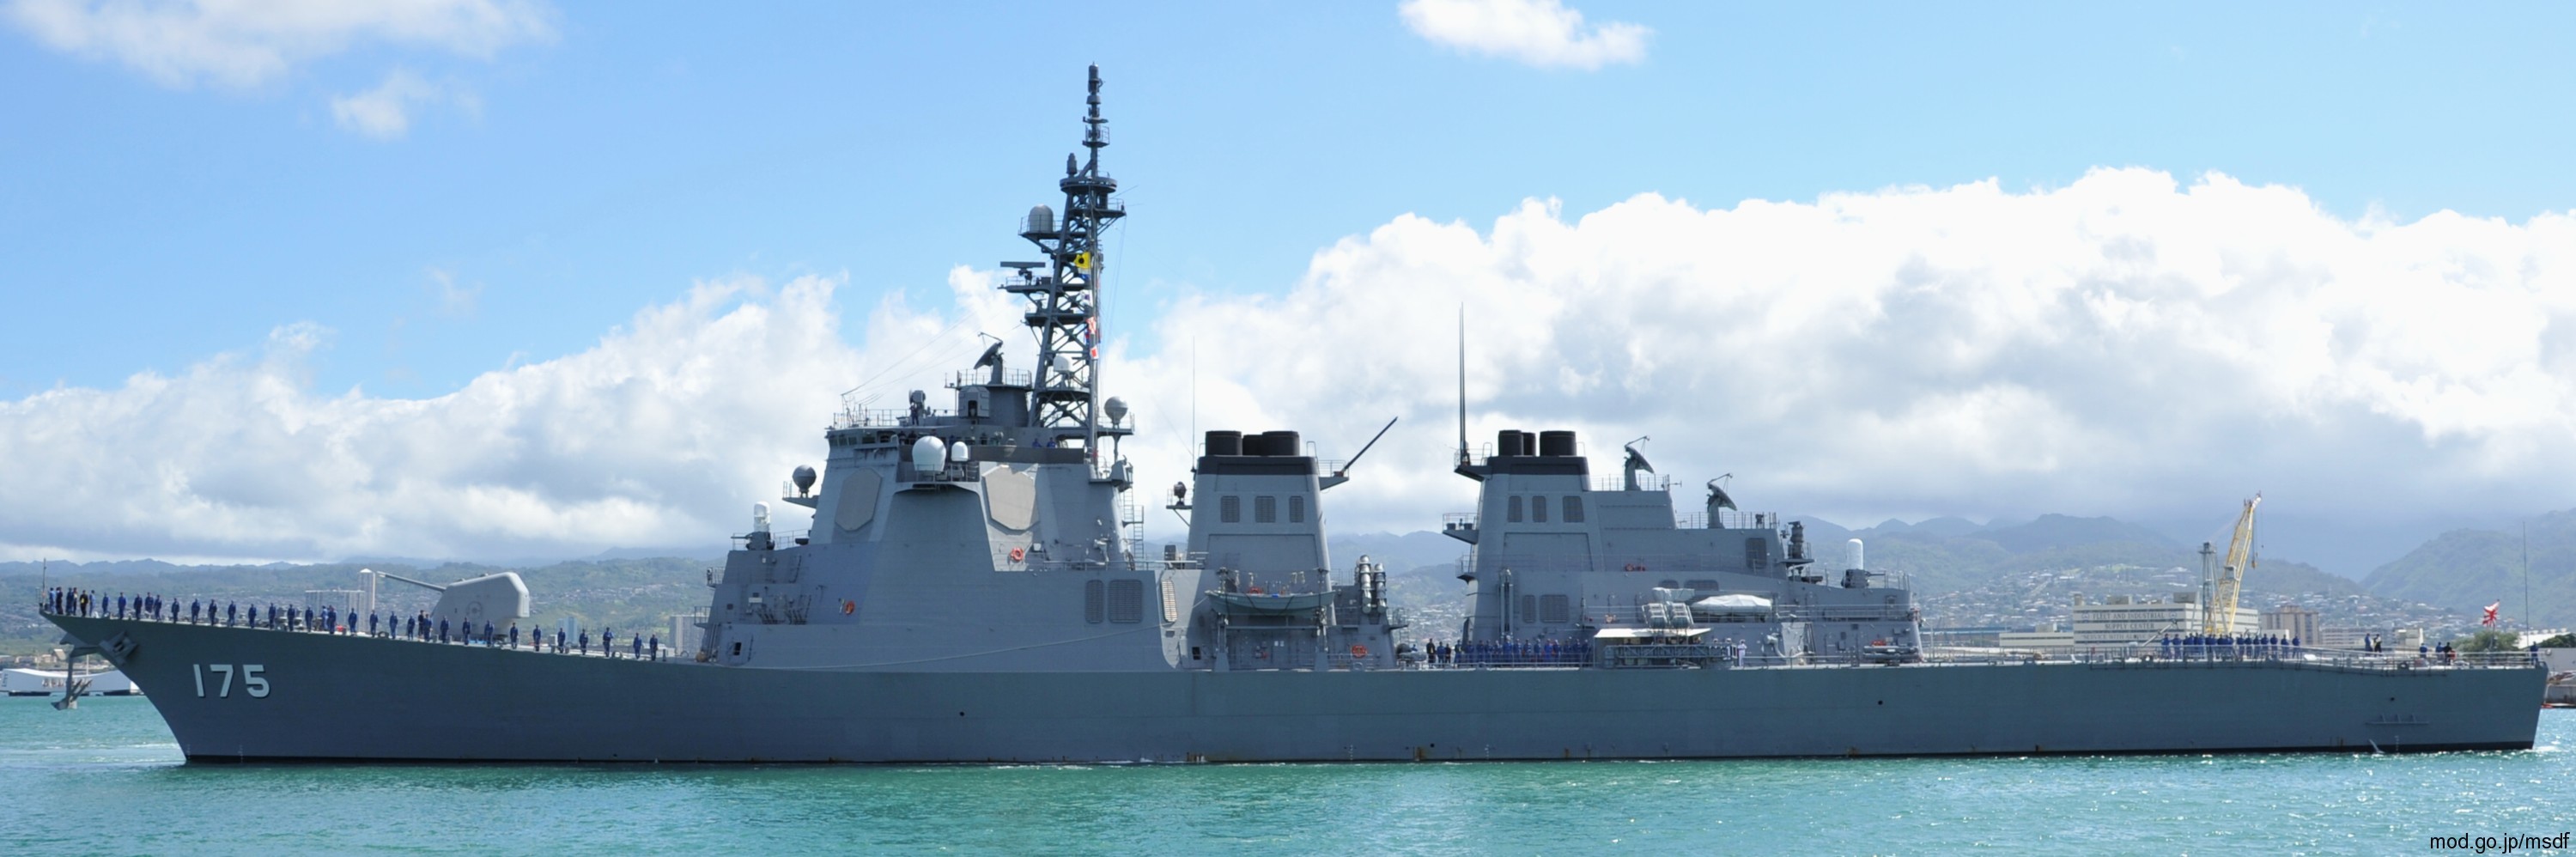 ddg-175 jds myoko kongou class destroyer japan maritime self defense force jmsdf 09